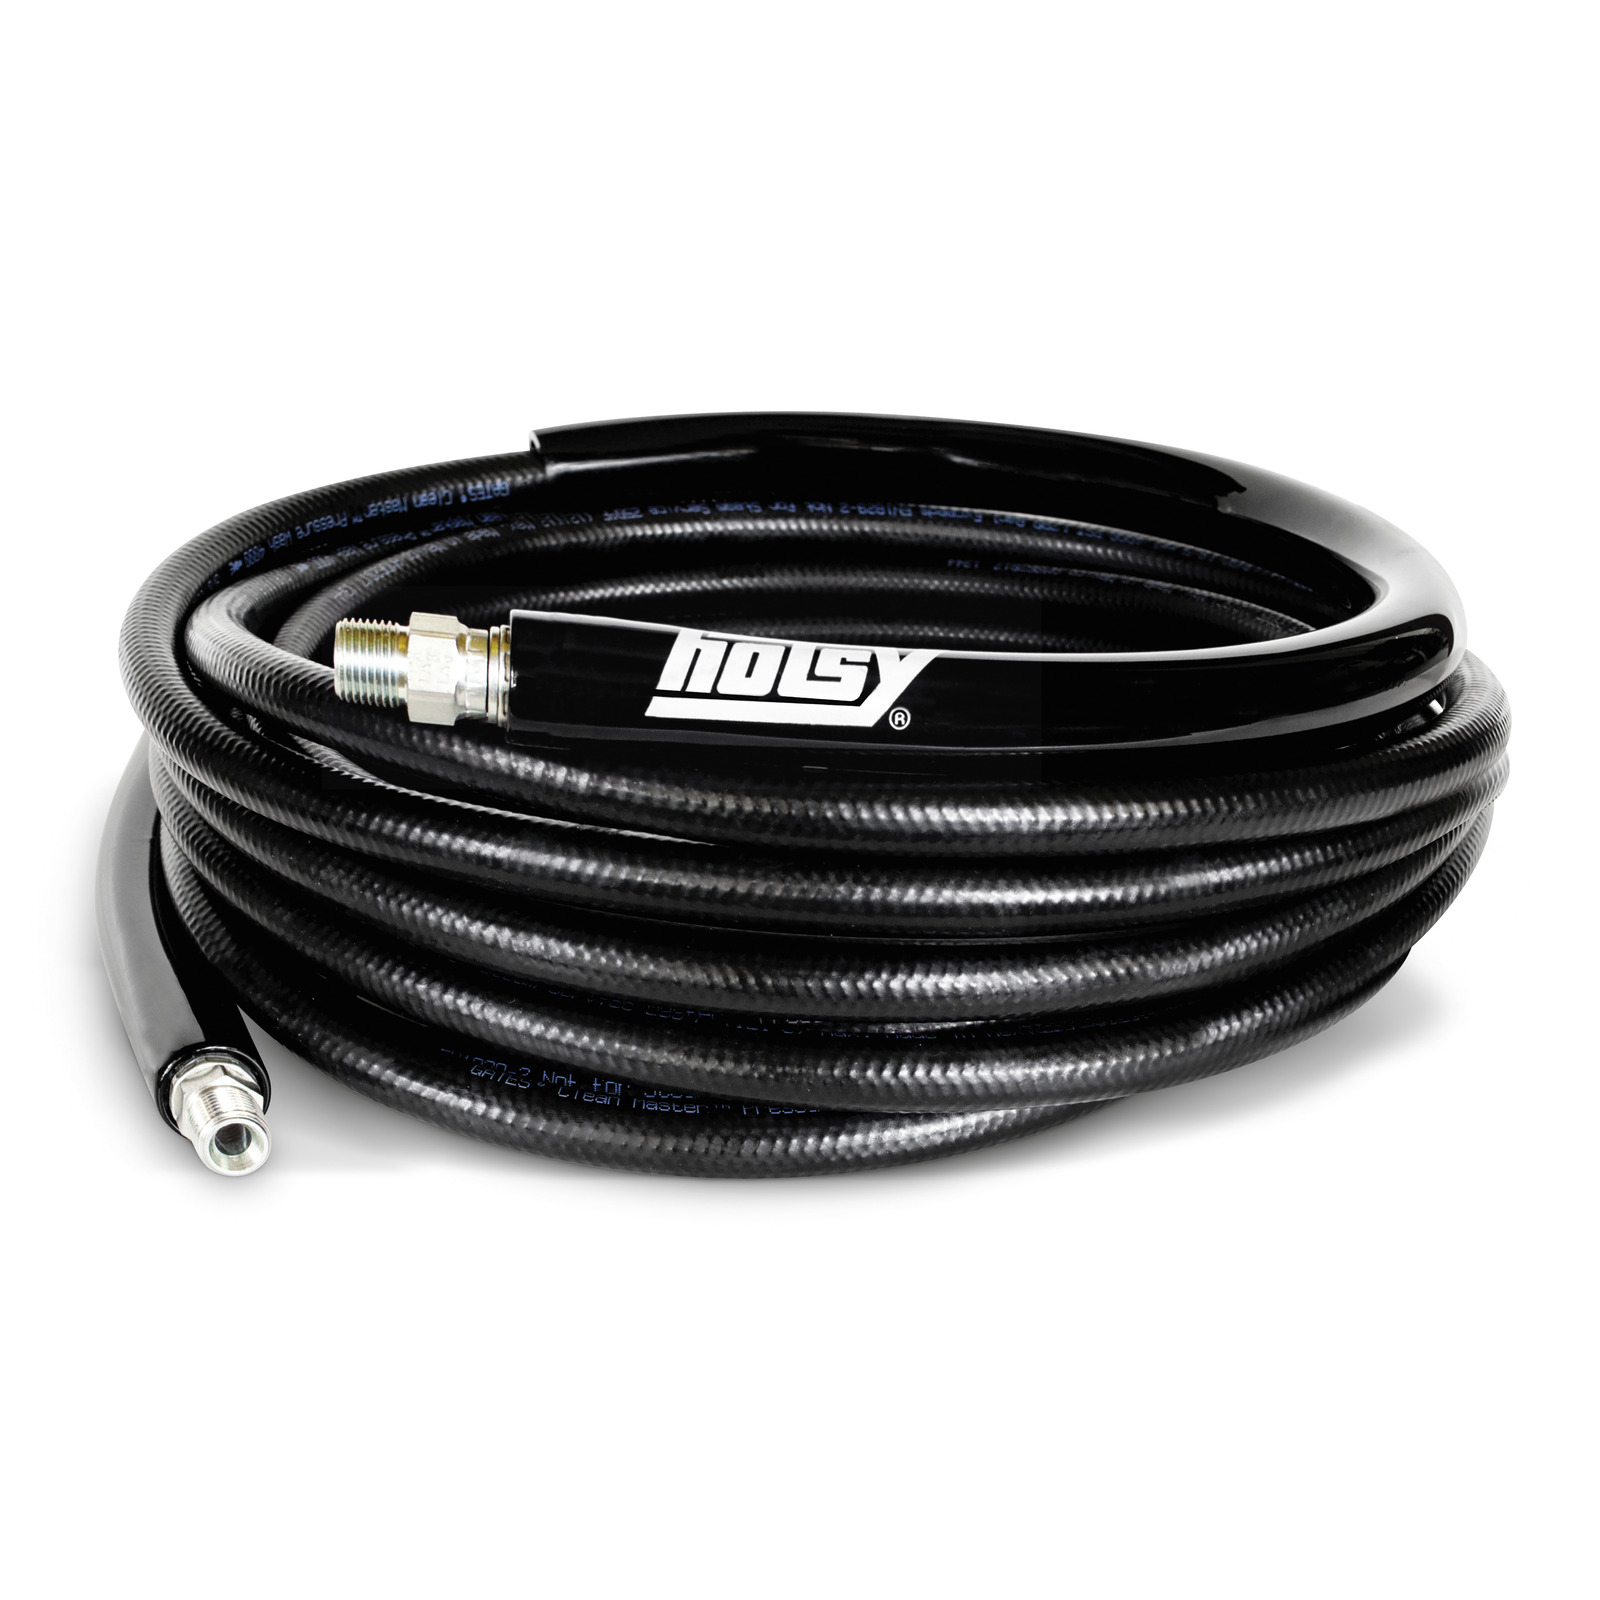 50' High-Pressure Hose: 1-wire, 3/8 ID, 4000 PSI